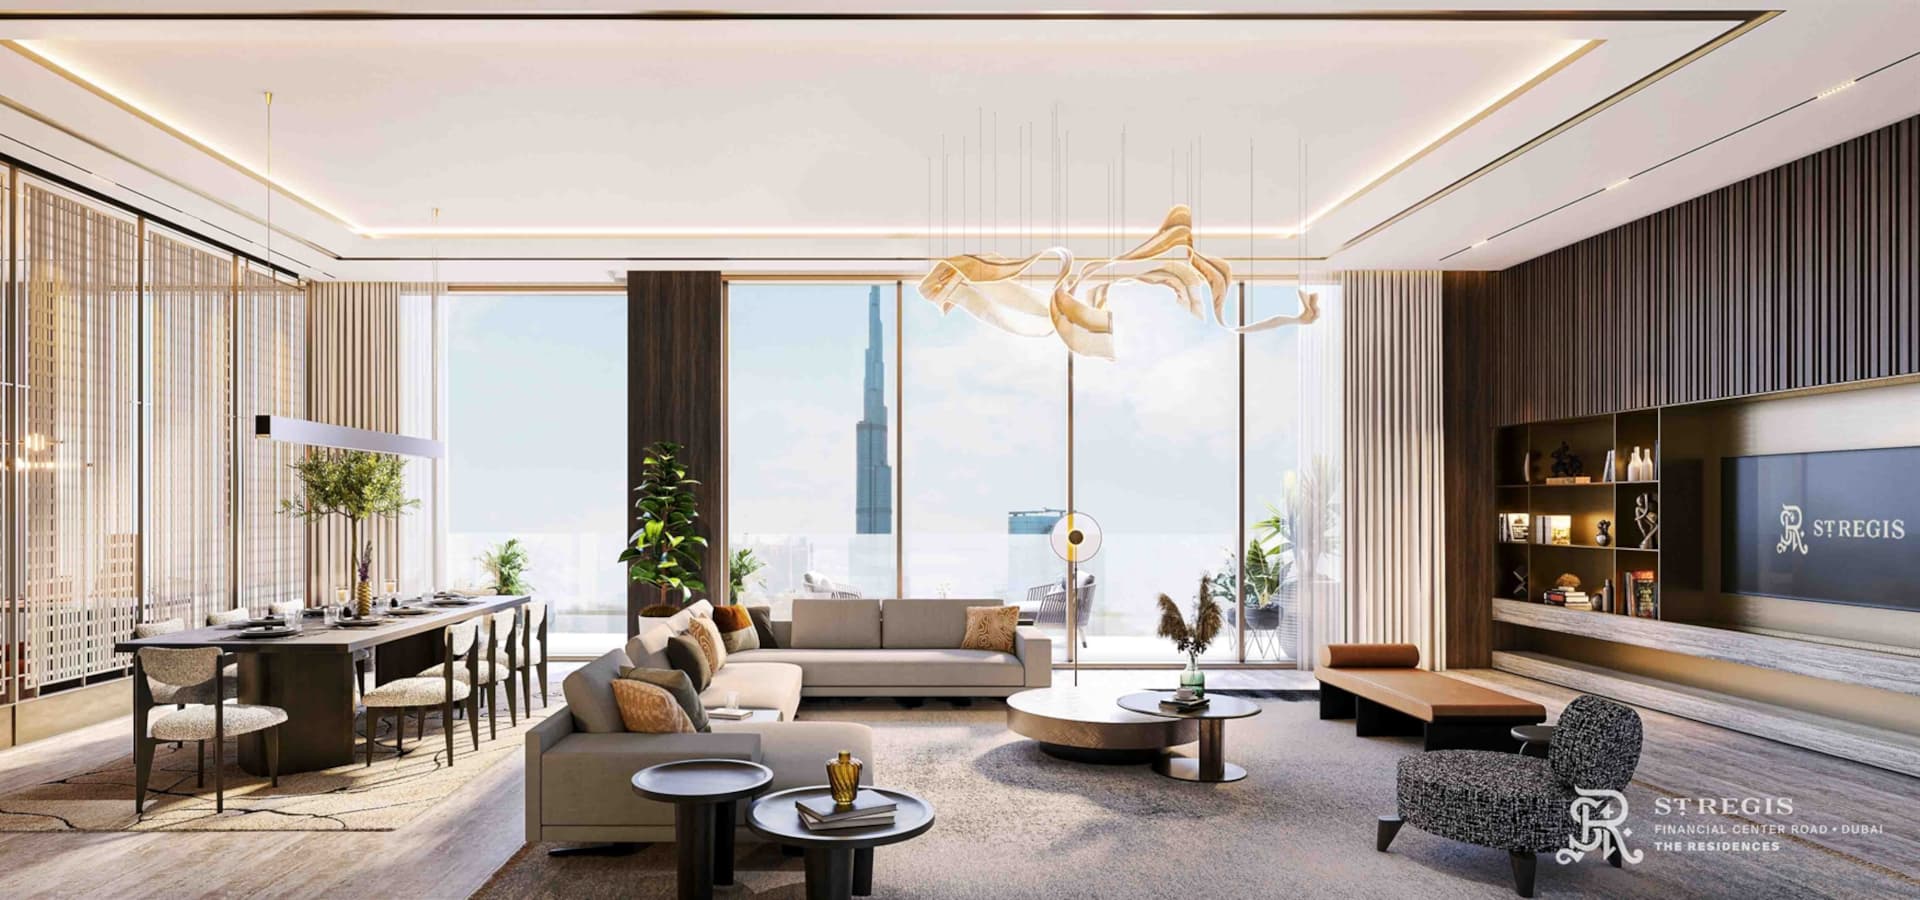 St. Regis Residences - FCR by Refine in Downtown Dubai, Dubai ...